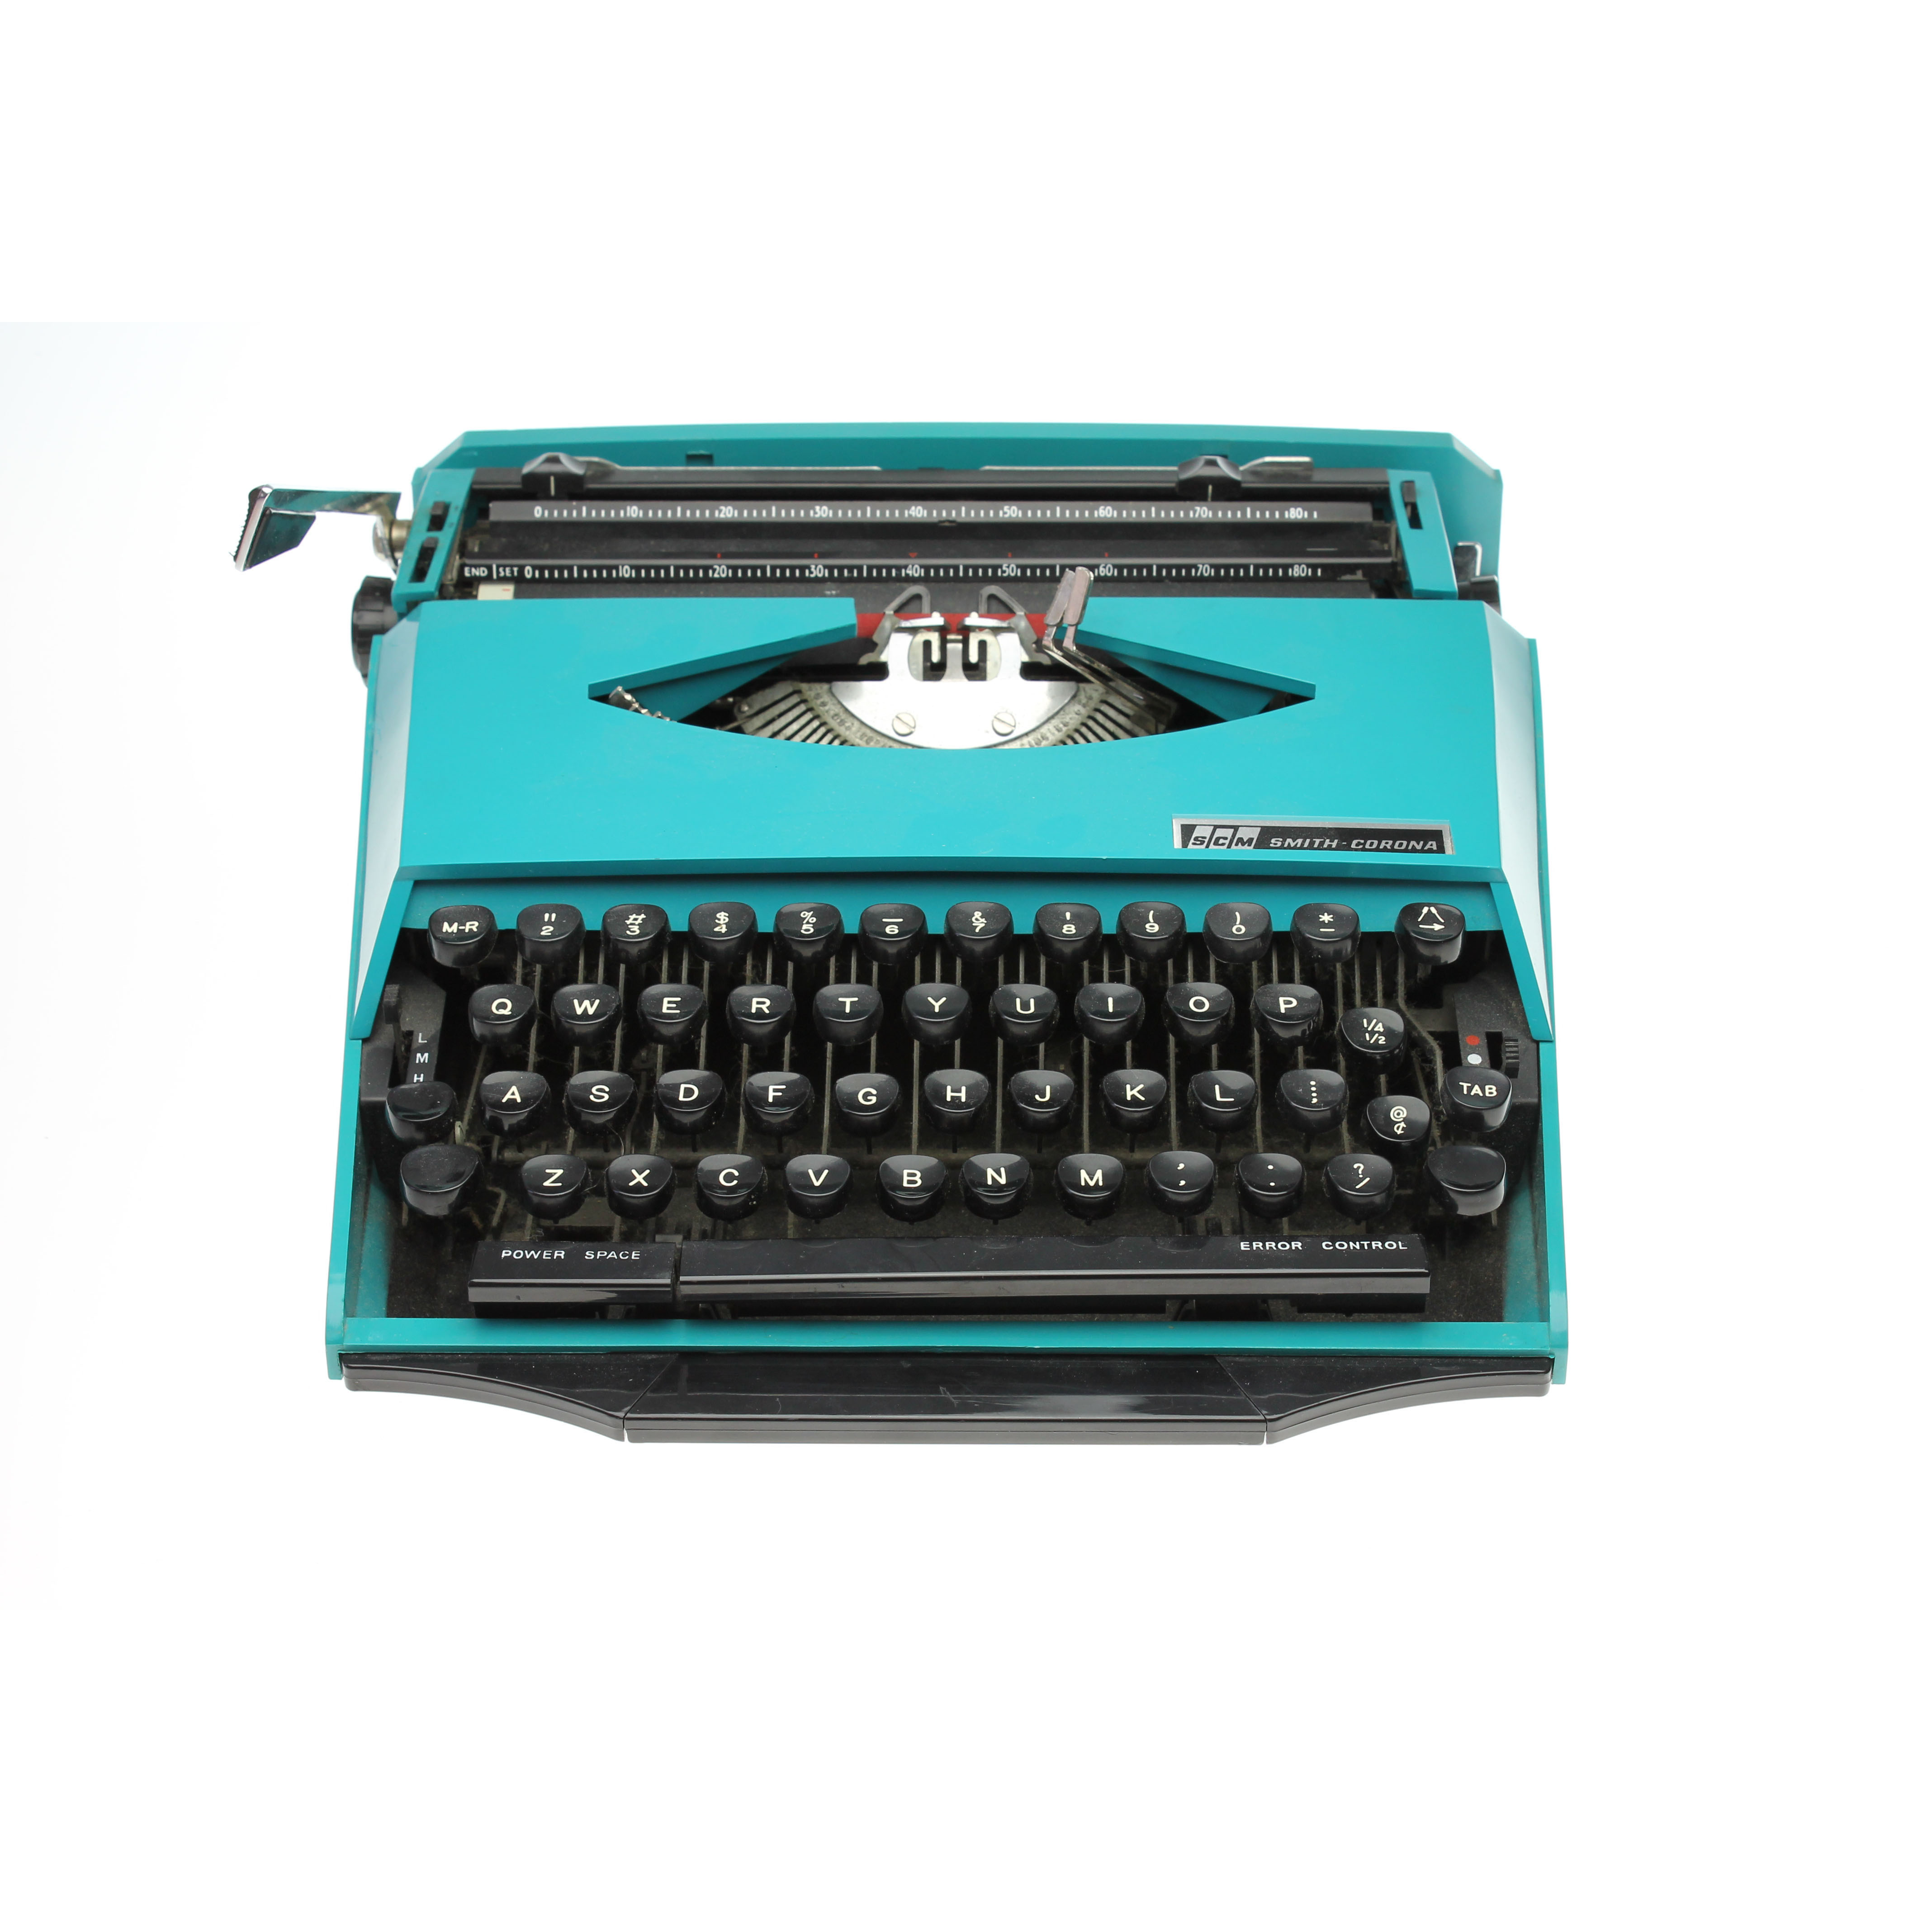 Turquoise Smith Corona vintage typewriter